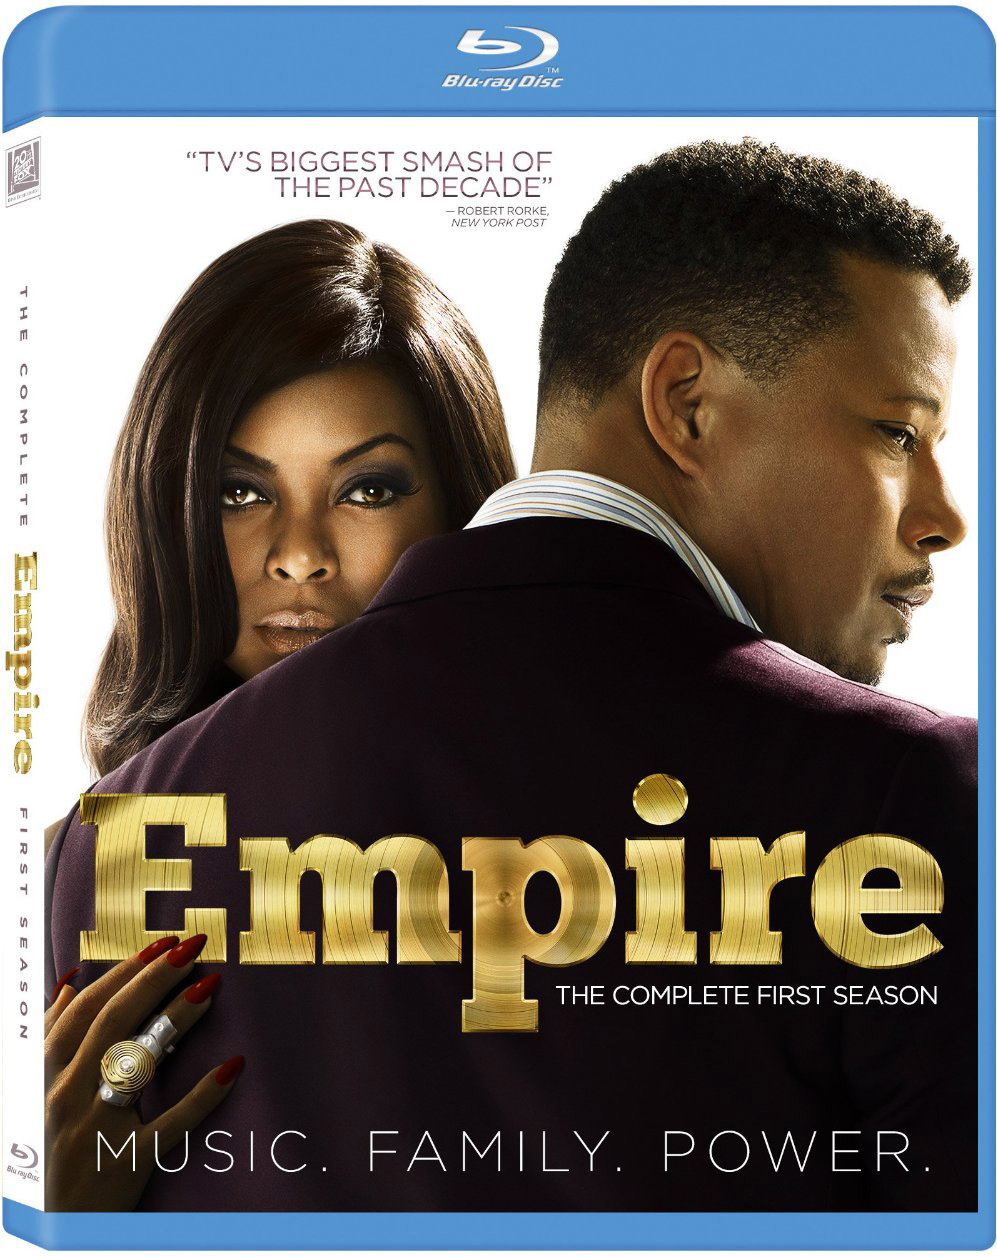 Empire: Season 1